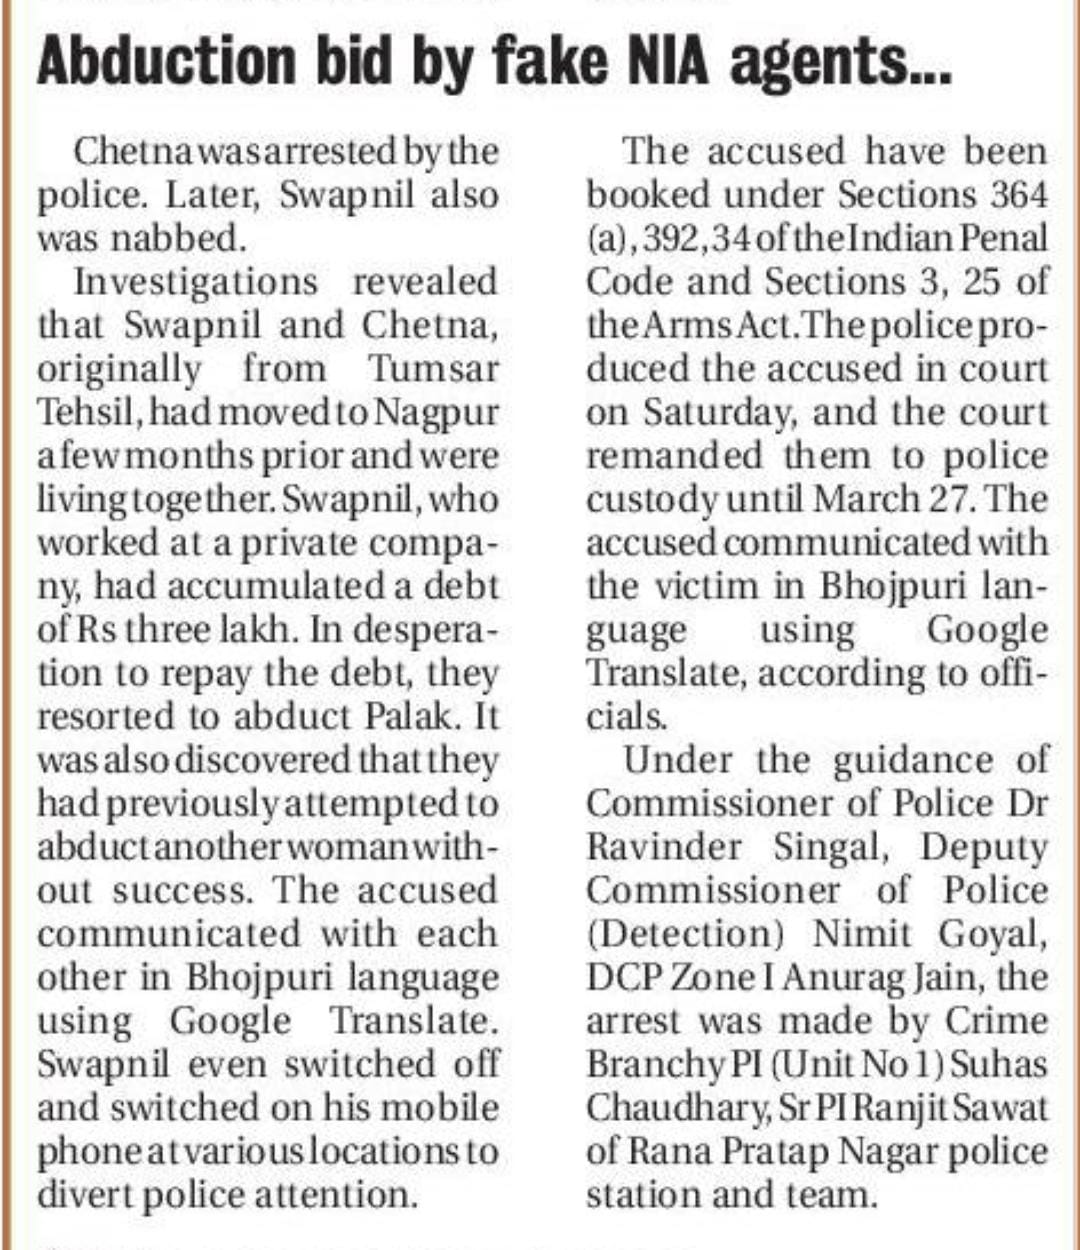 Abduction bid by fake NIA agents foiled - Dr.Ravinder Singal (2)